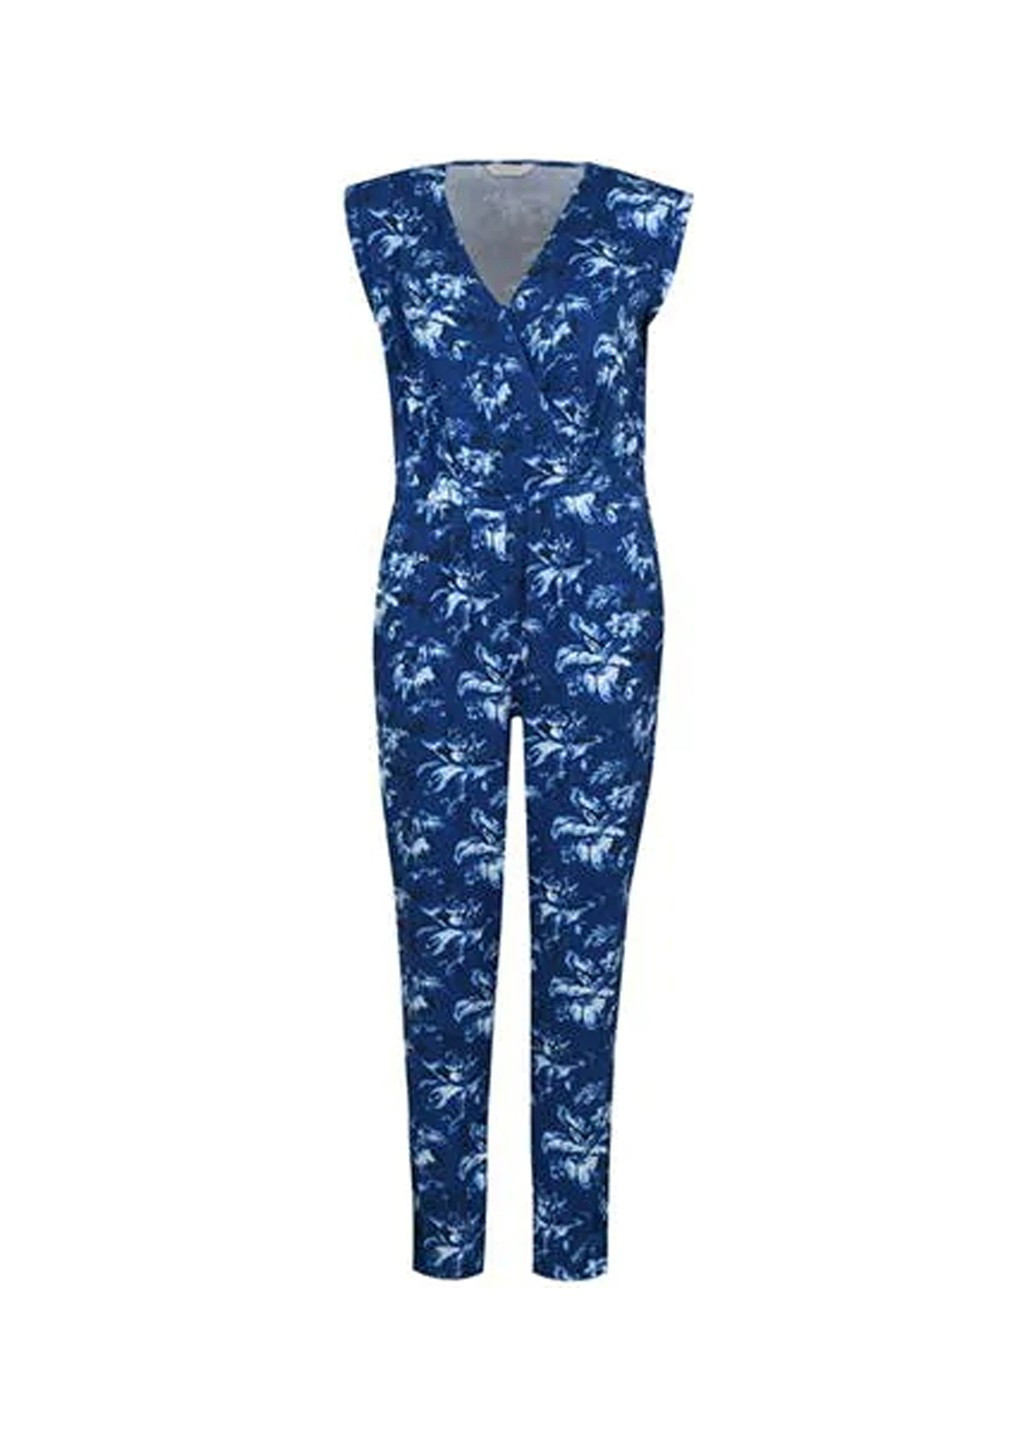 Комбинезон Jack Wills комбинезон-брюки цветочный синий кэжуал вискоза